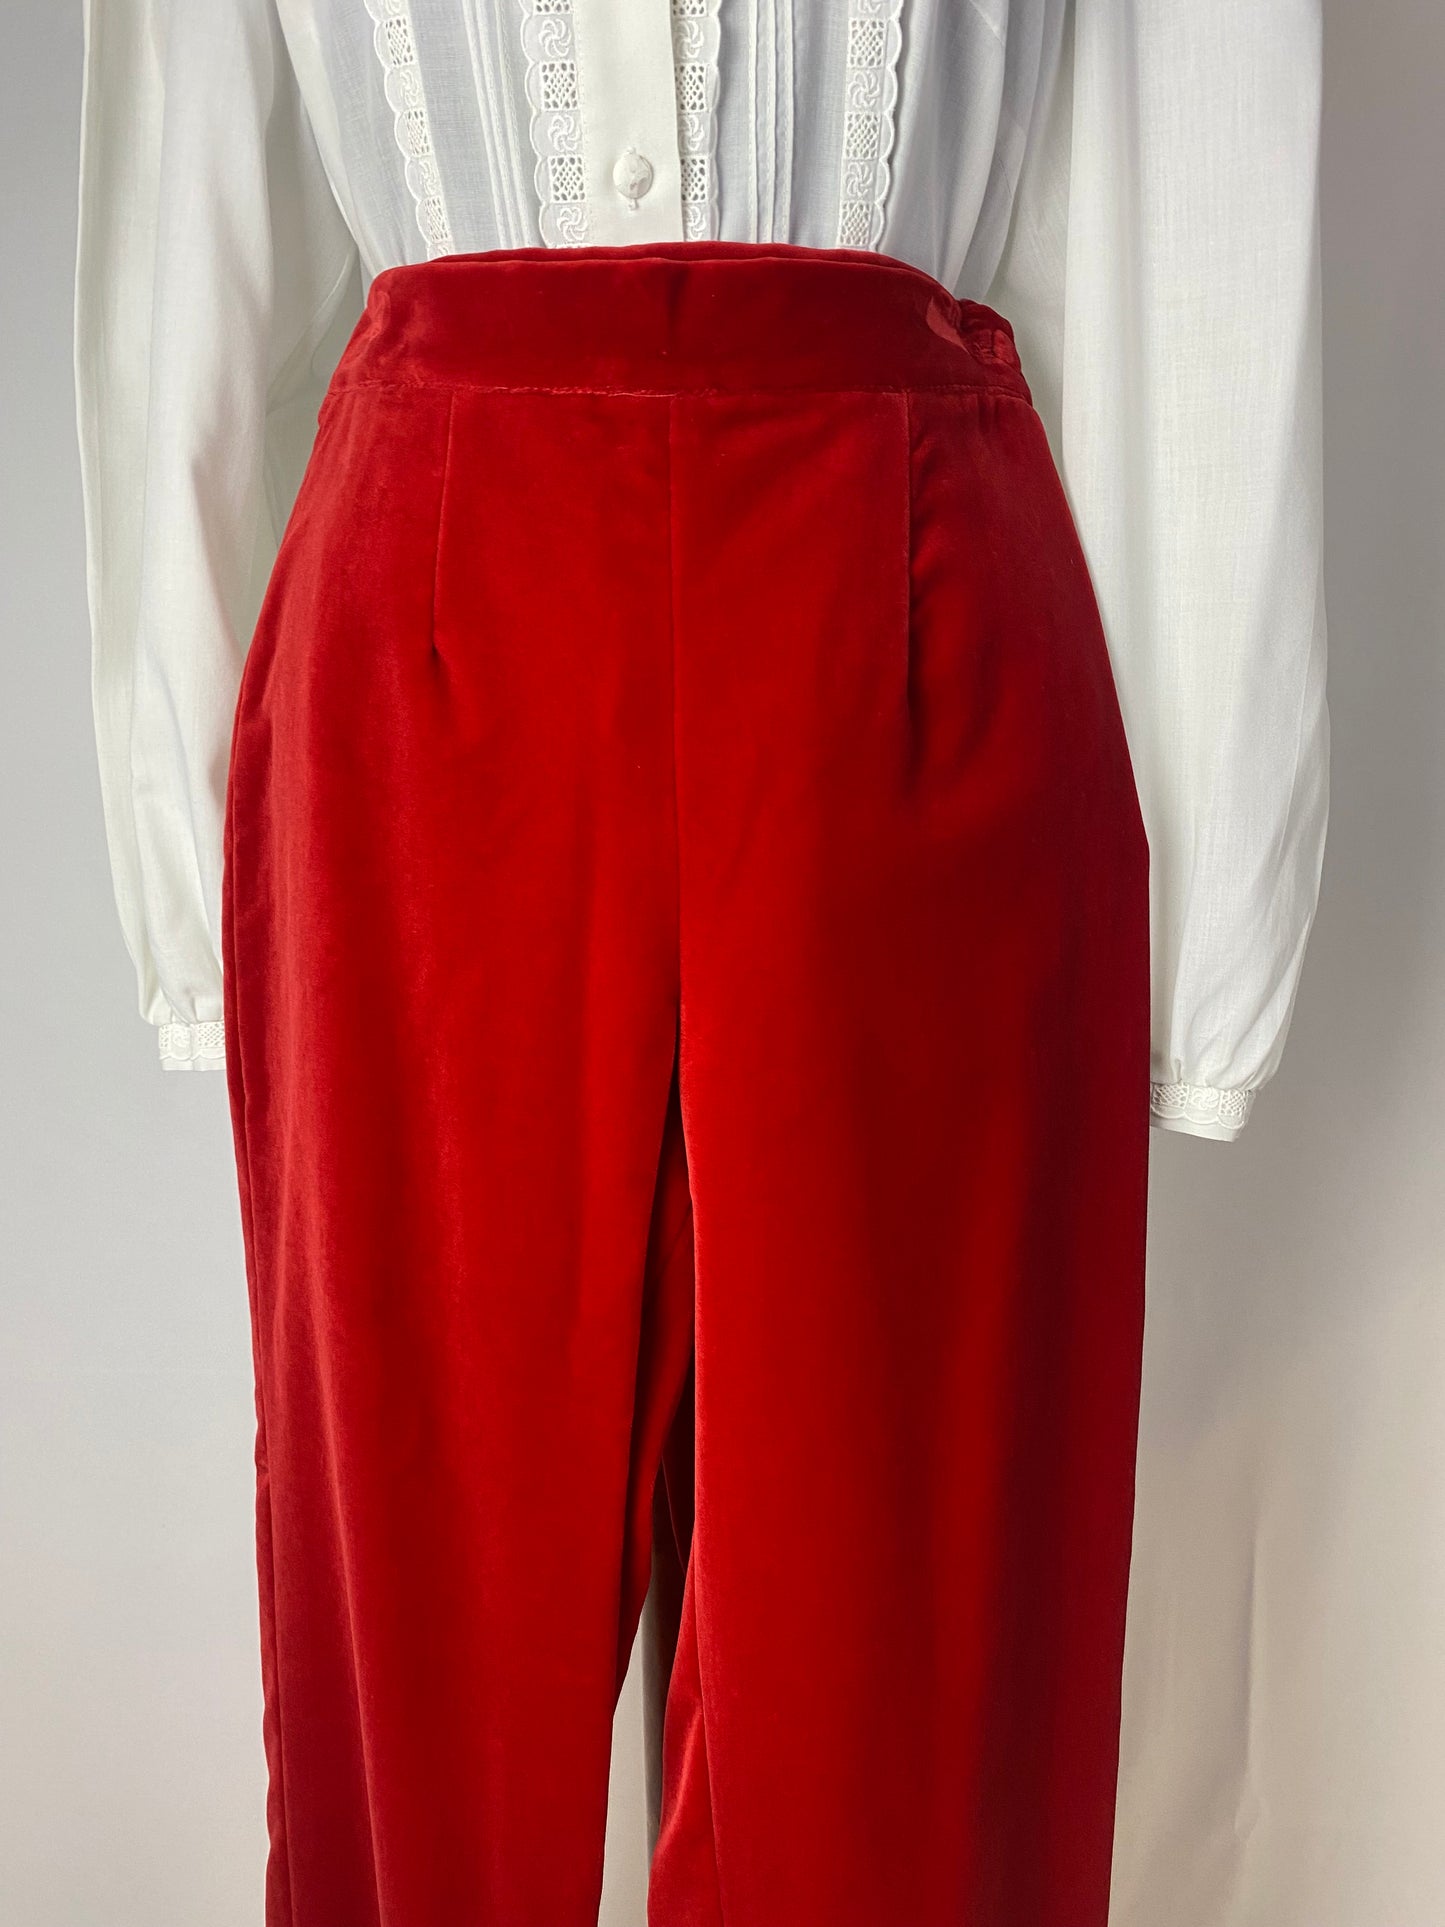 Pantaloni in velluto rosso - TG. 46